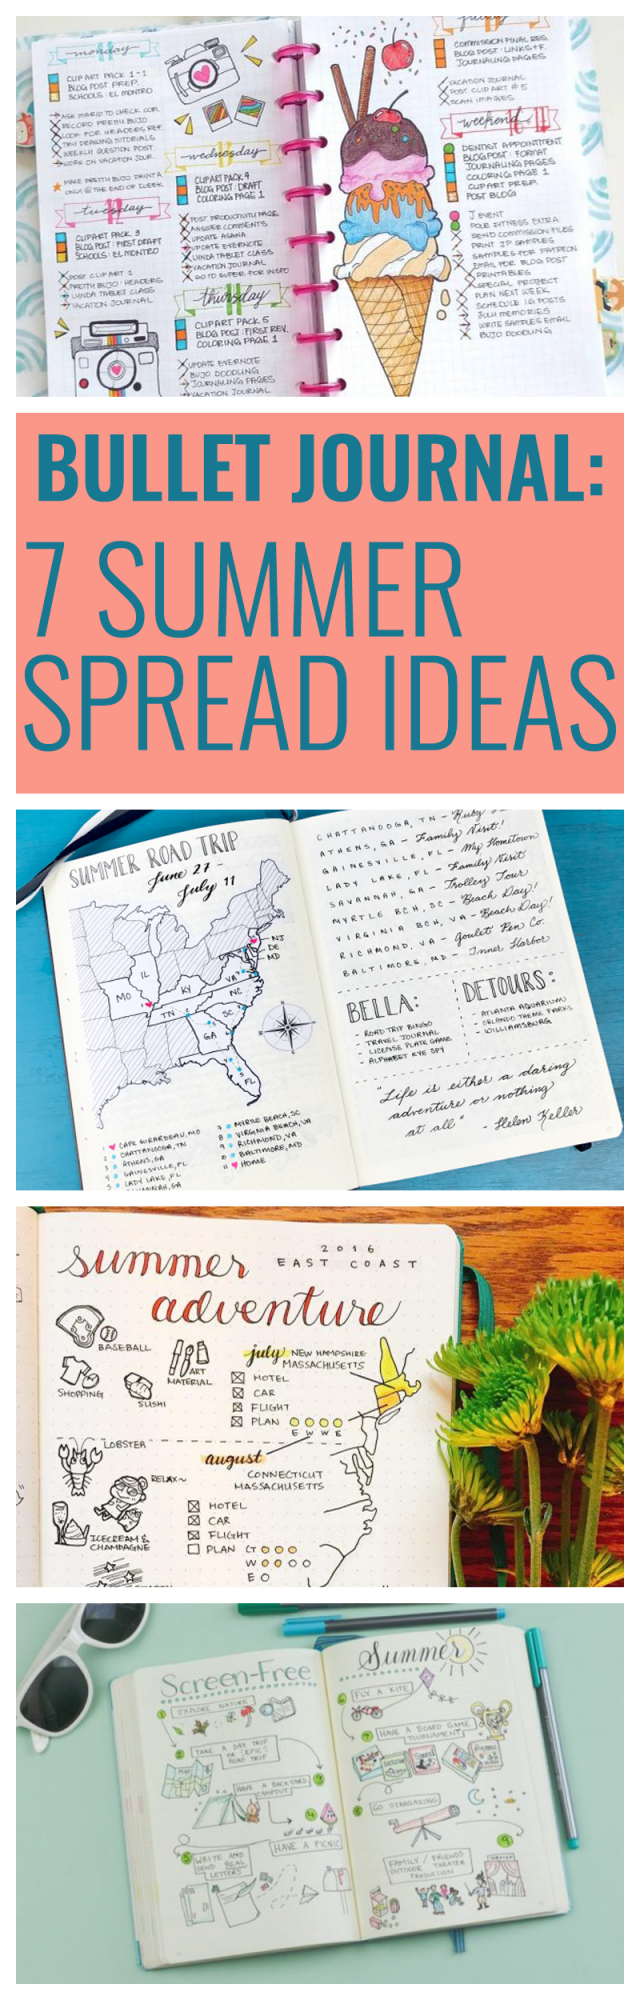 7 Summer Spread Ideas for Bullet Journals